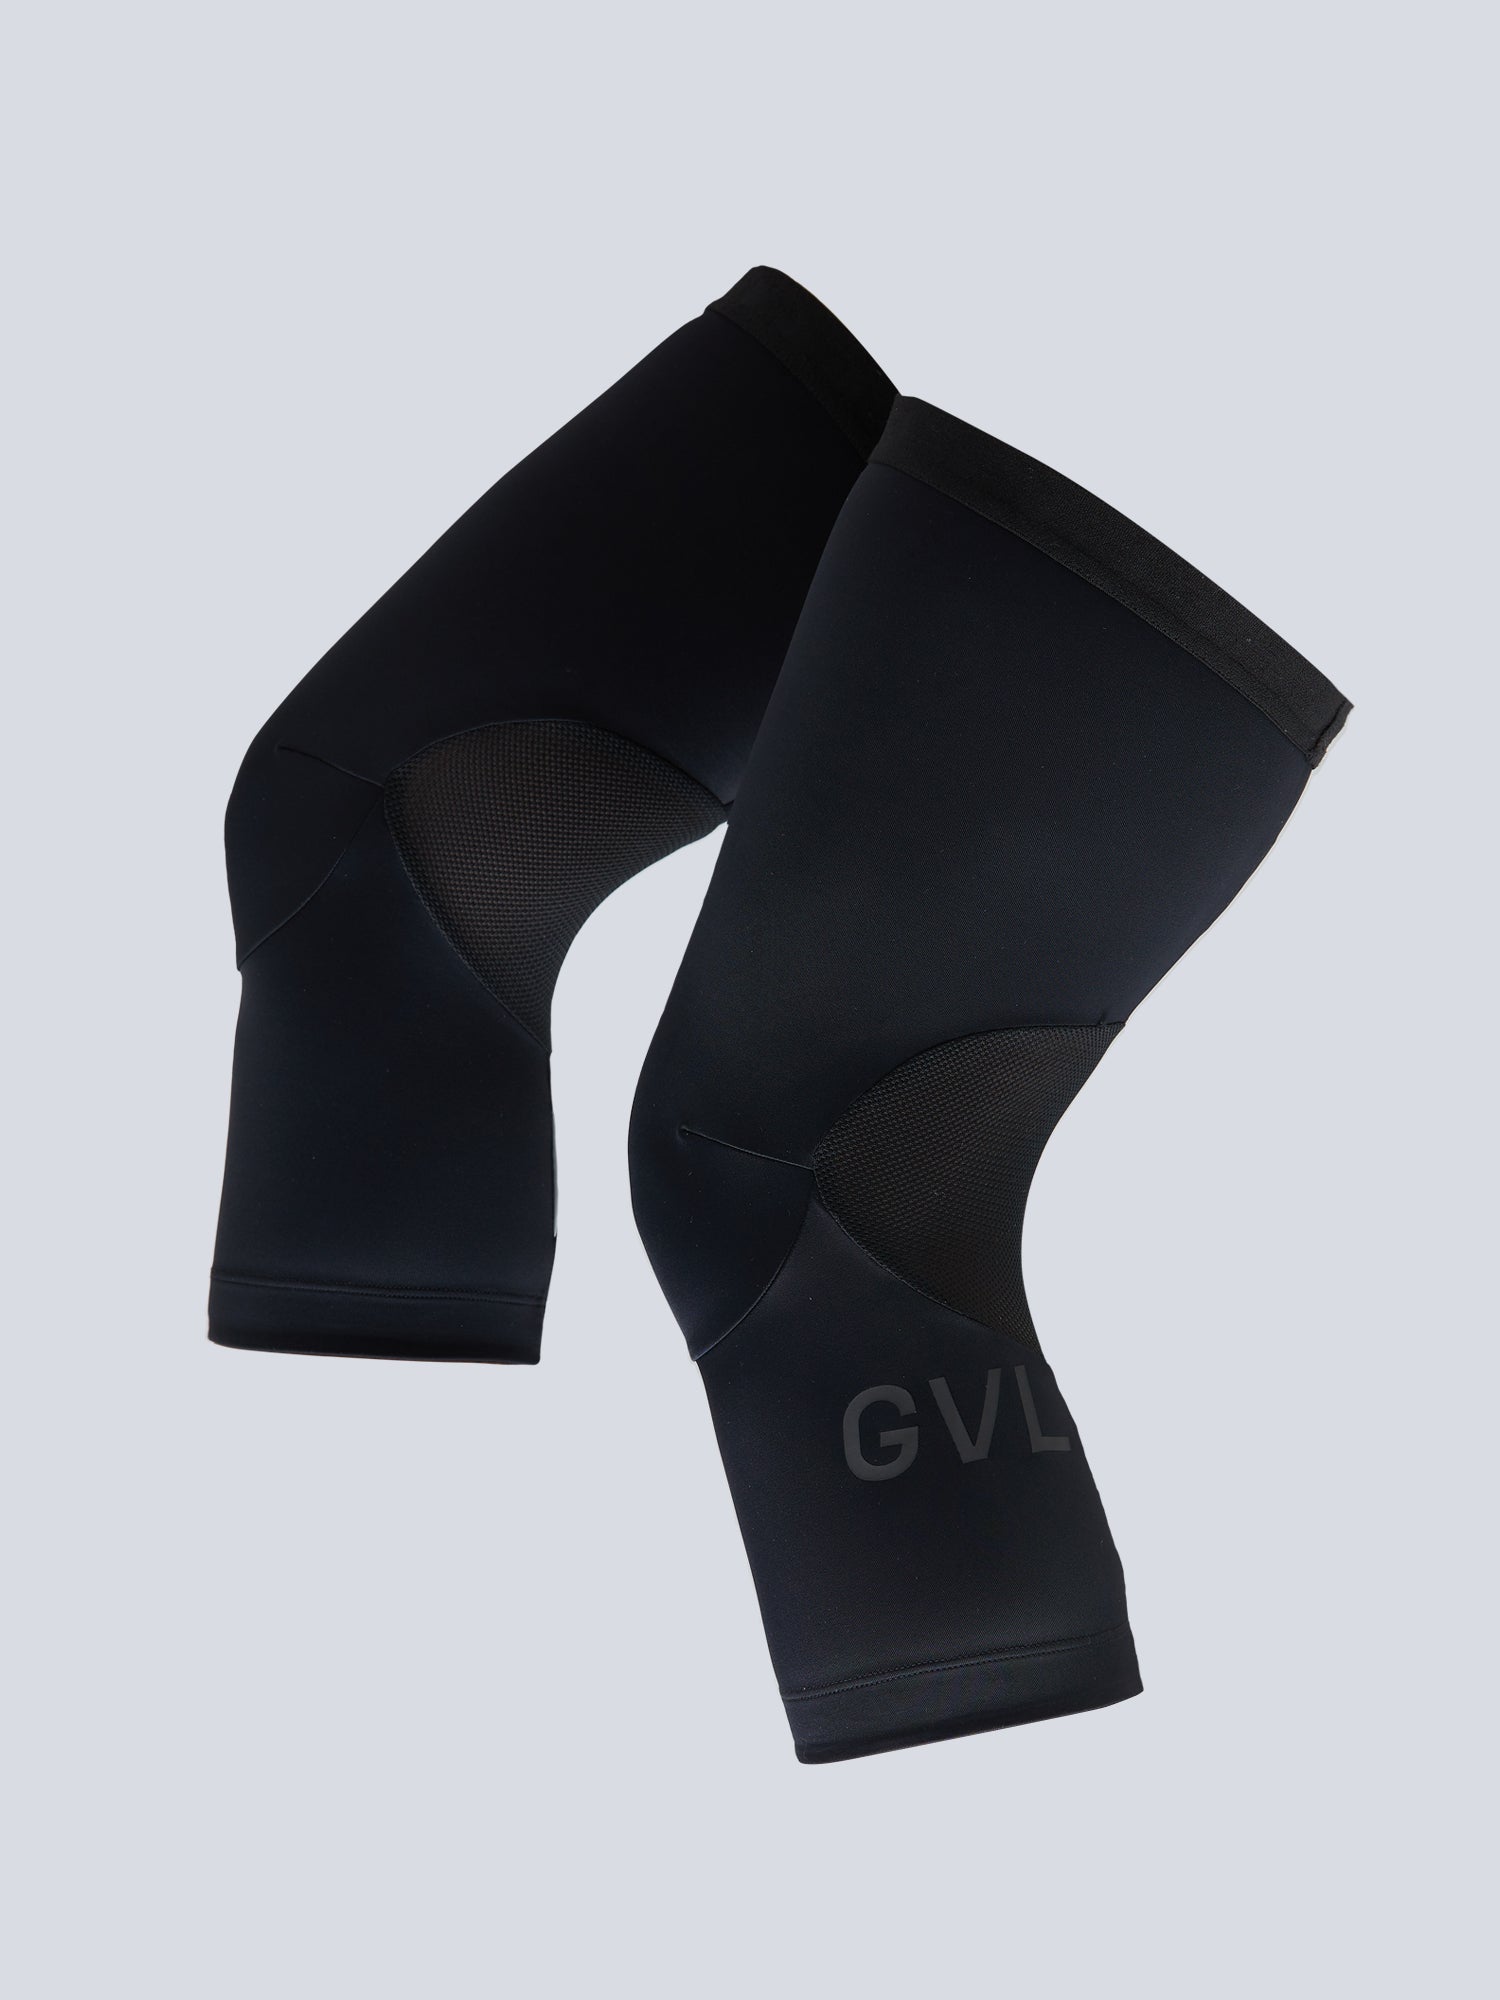 GVL Knee Warmers